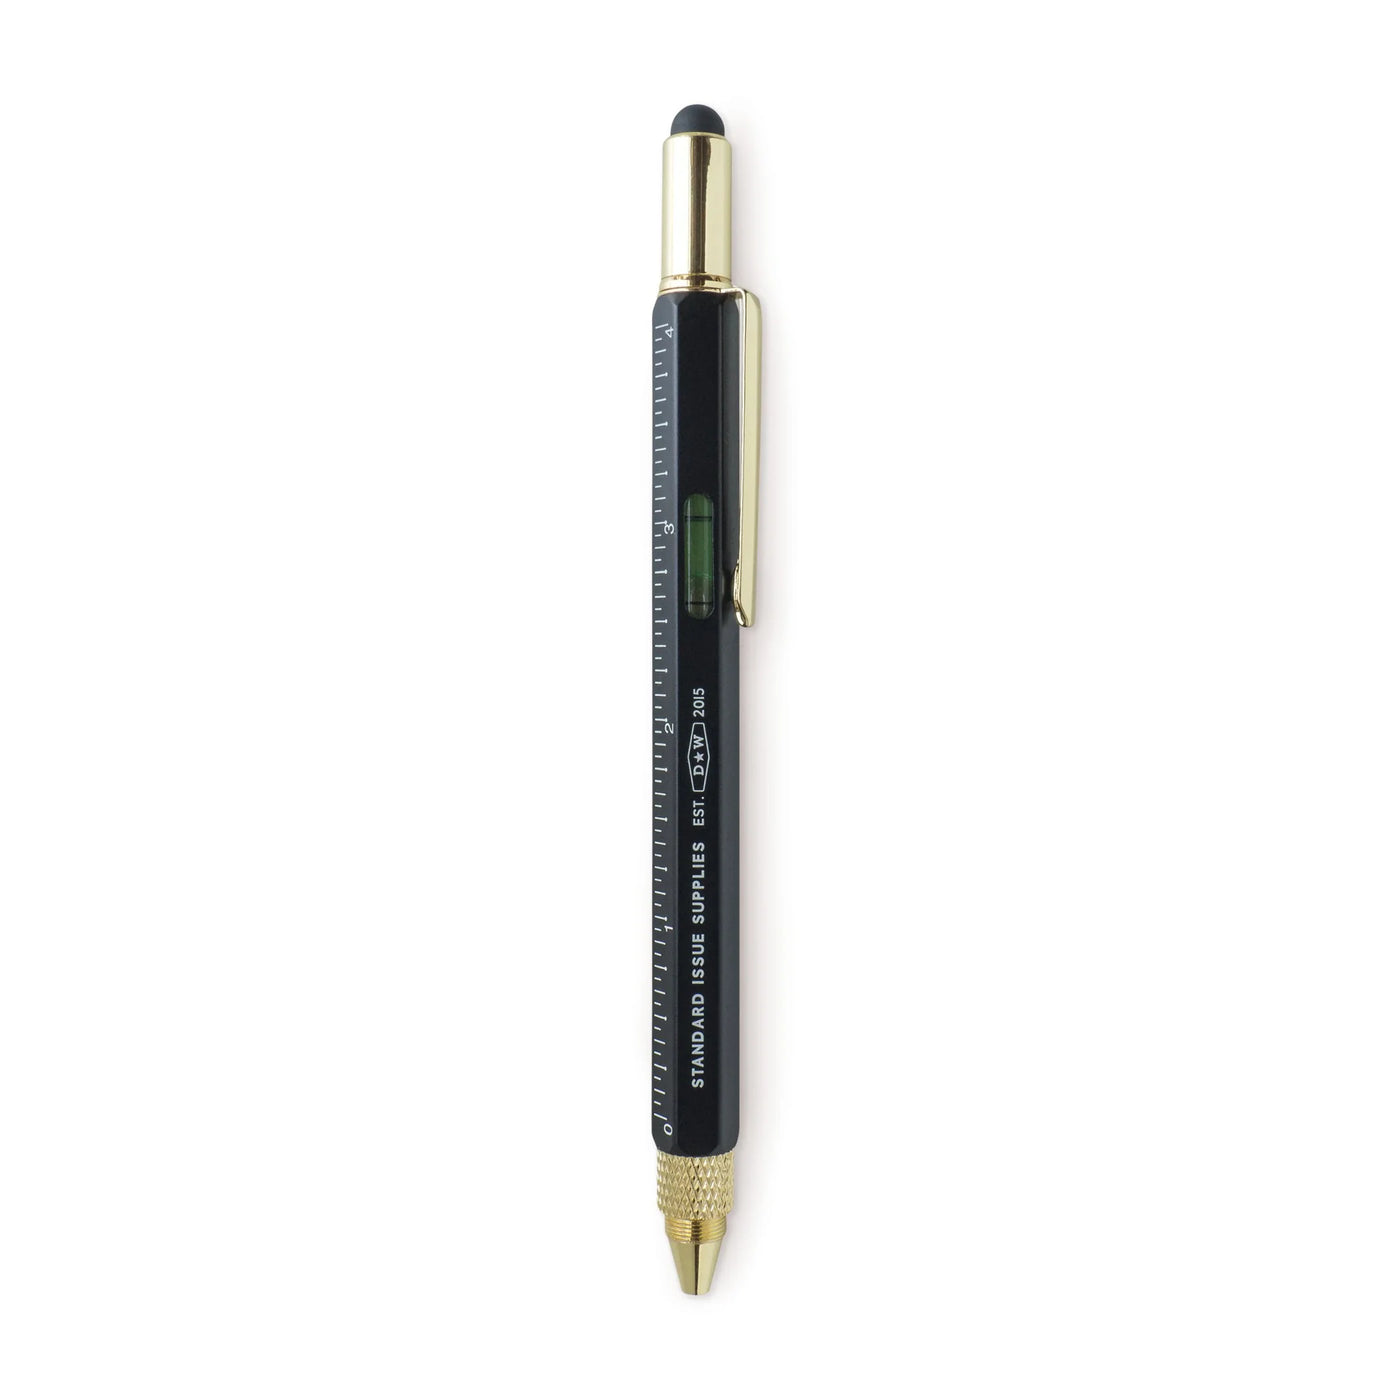 Standard Issue Multi-Tool Pen